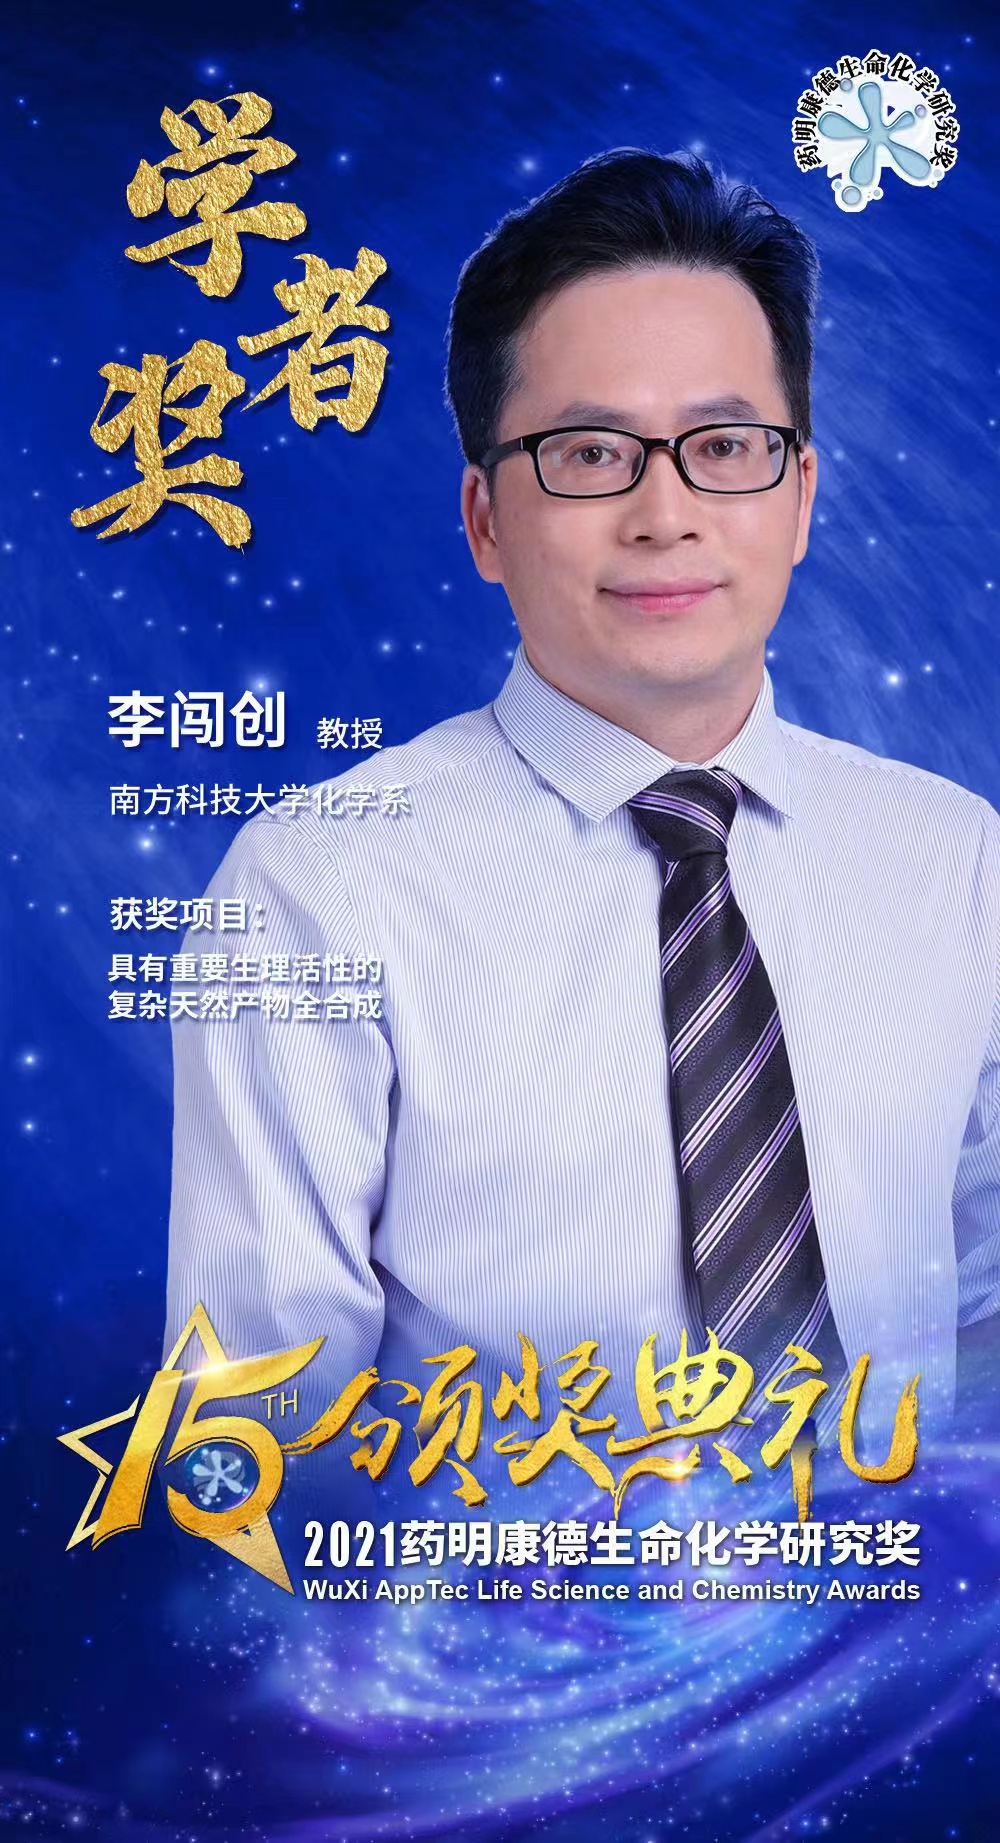 Dec 2021: Congratulations to Prof. Li on winning WuXi AppTec Life Chemistry Award.(图1)